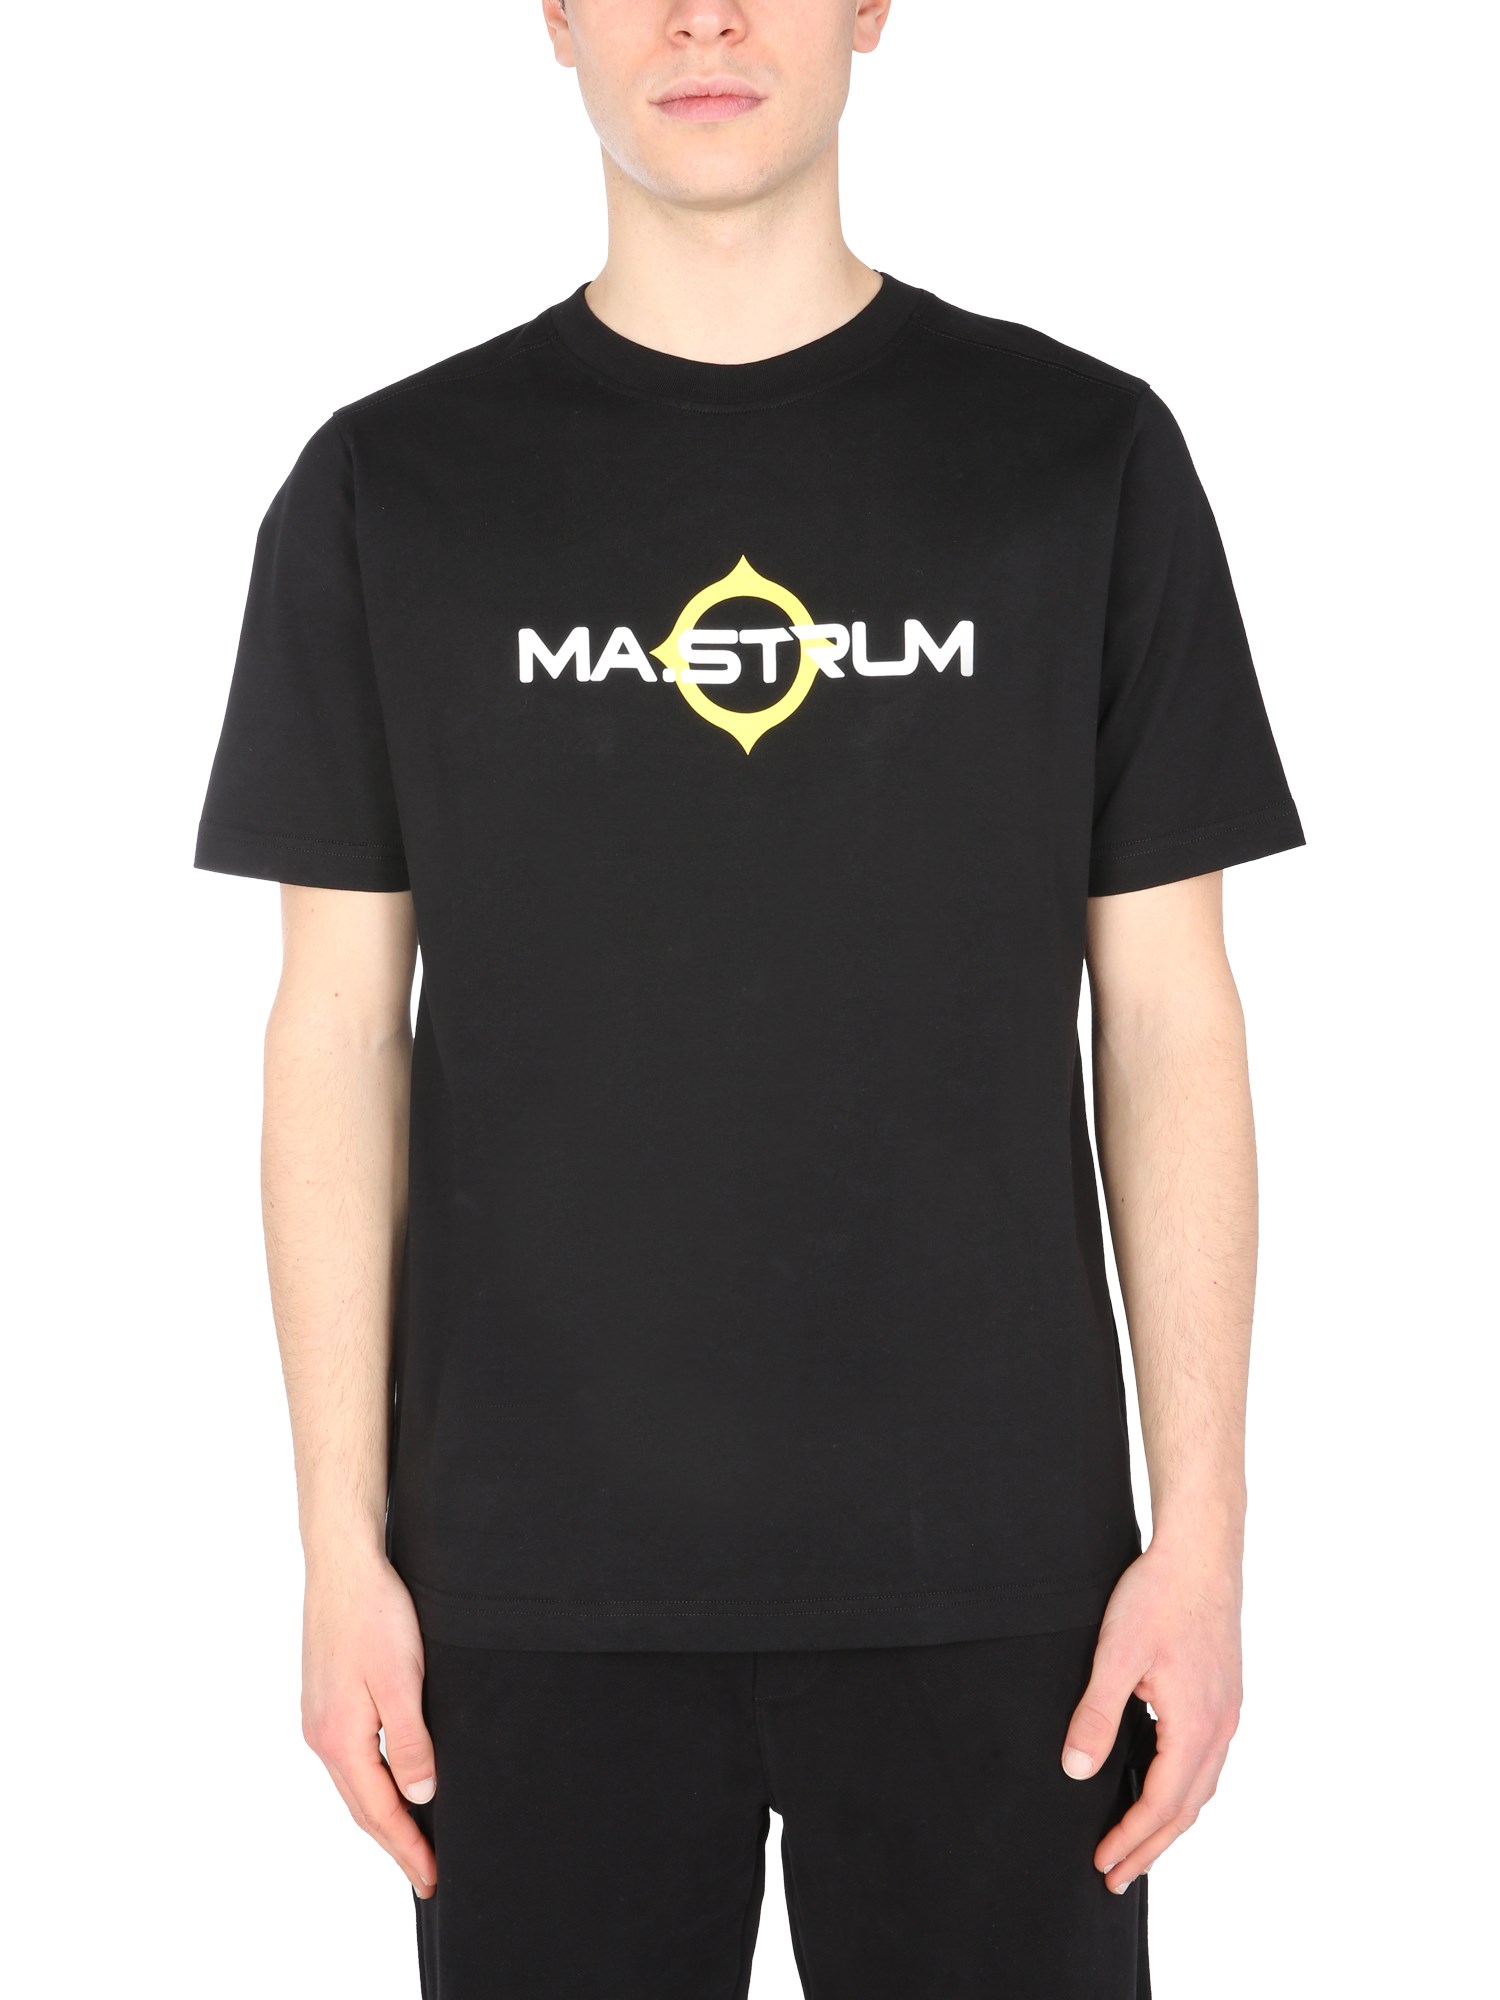 ma. strum crew neck t-shirt